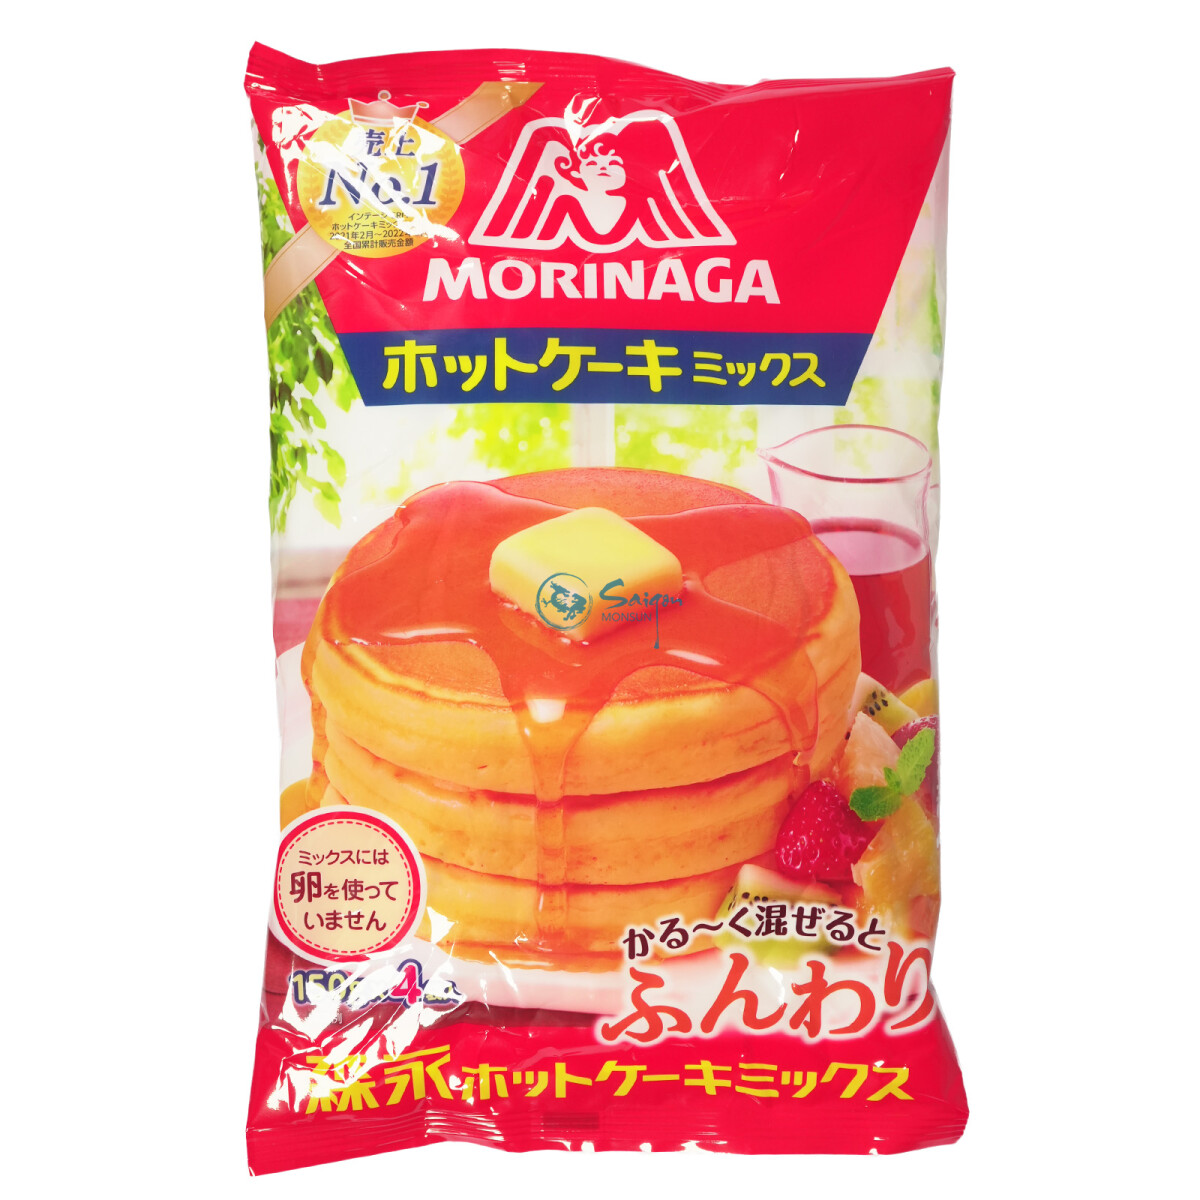 Morinaga Japan Pancake Mix Pfannkuchenmix 600g